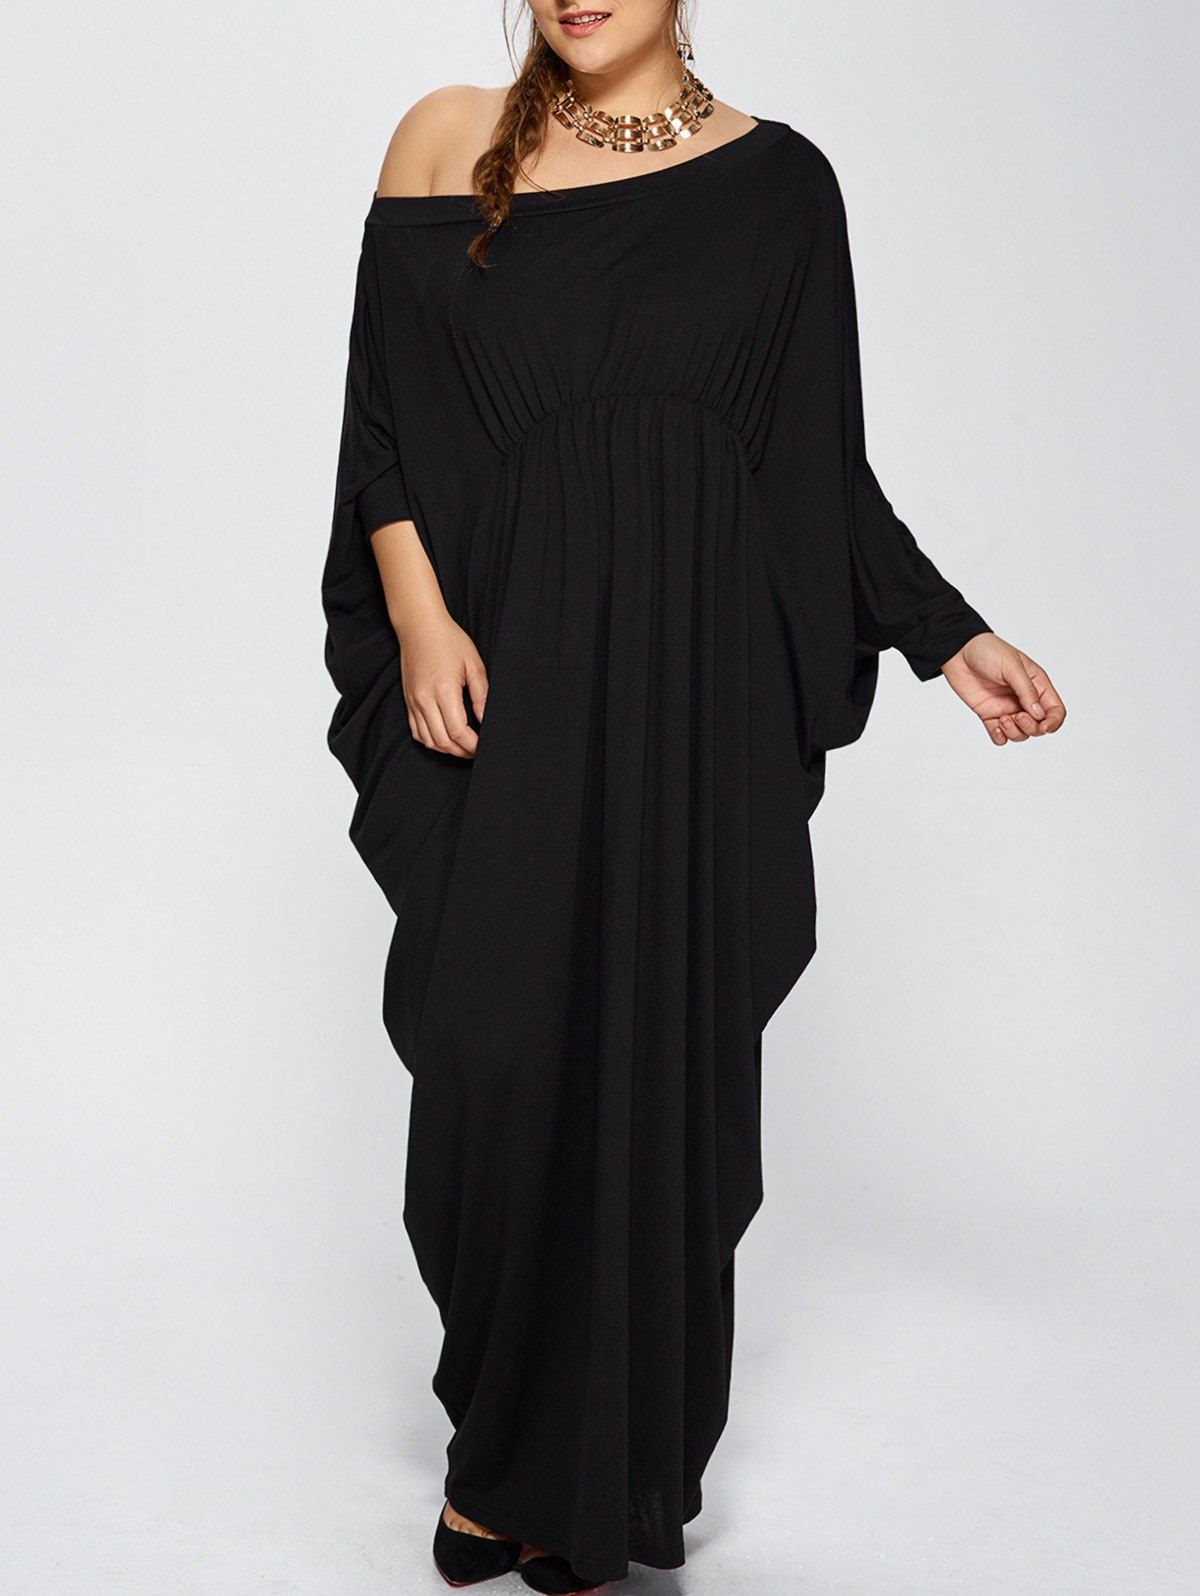 Plus Size Skew Neck Batwing Sleeve Maxi Dress, BLACK, XL in Plus Size